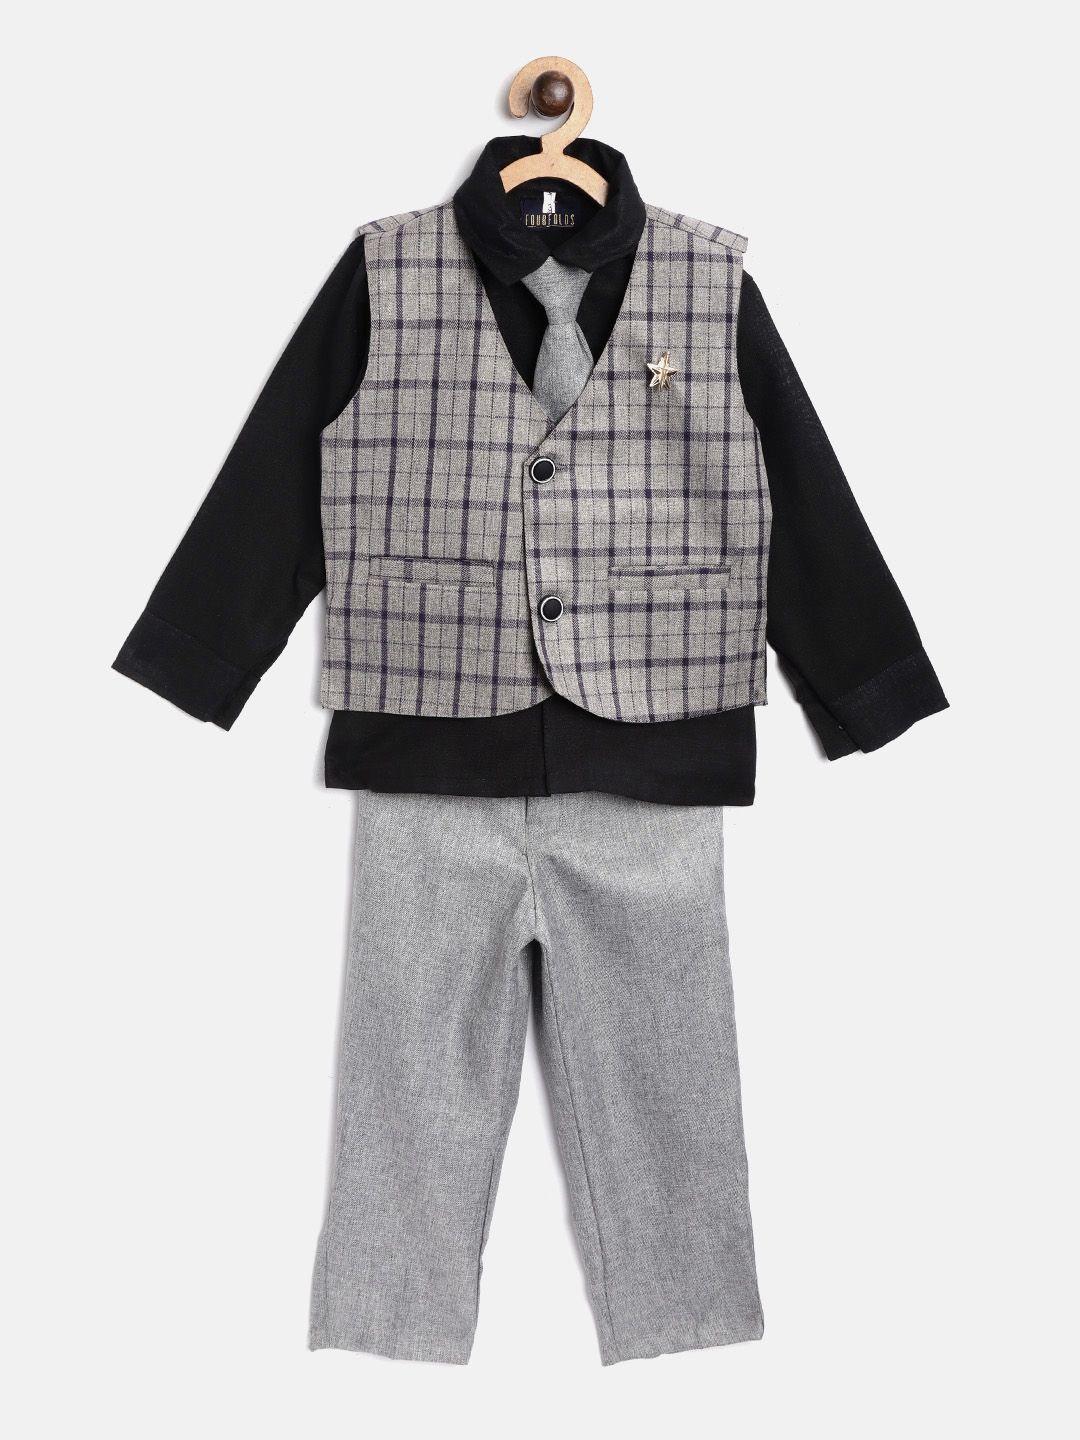 FOURFOLDS Boys Black & Grey Solid Clothing Set with Waistcoat & Tie